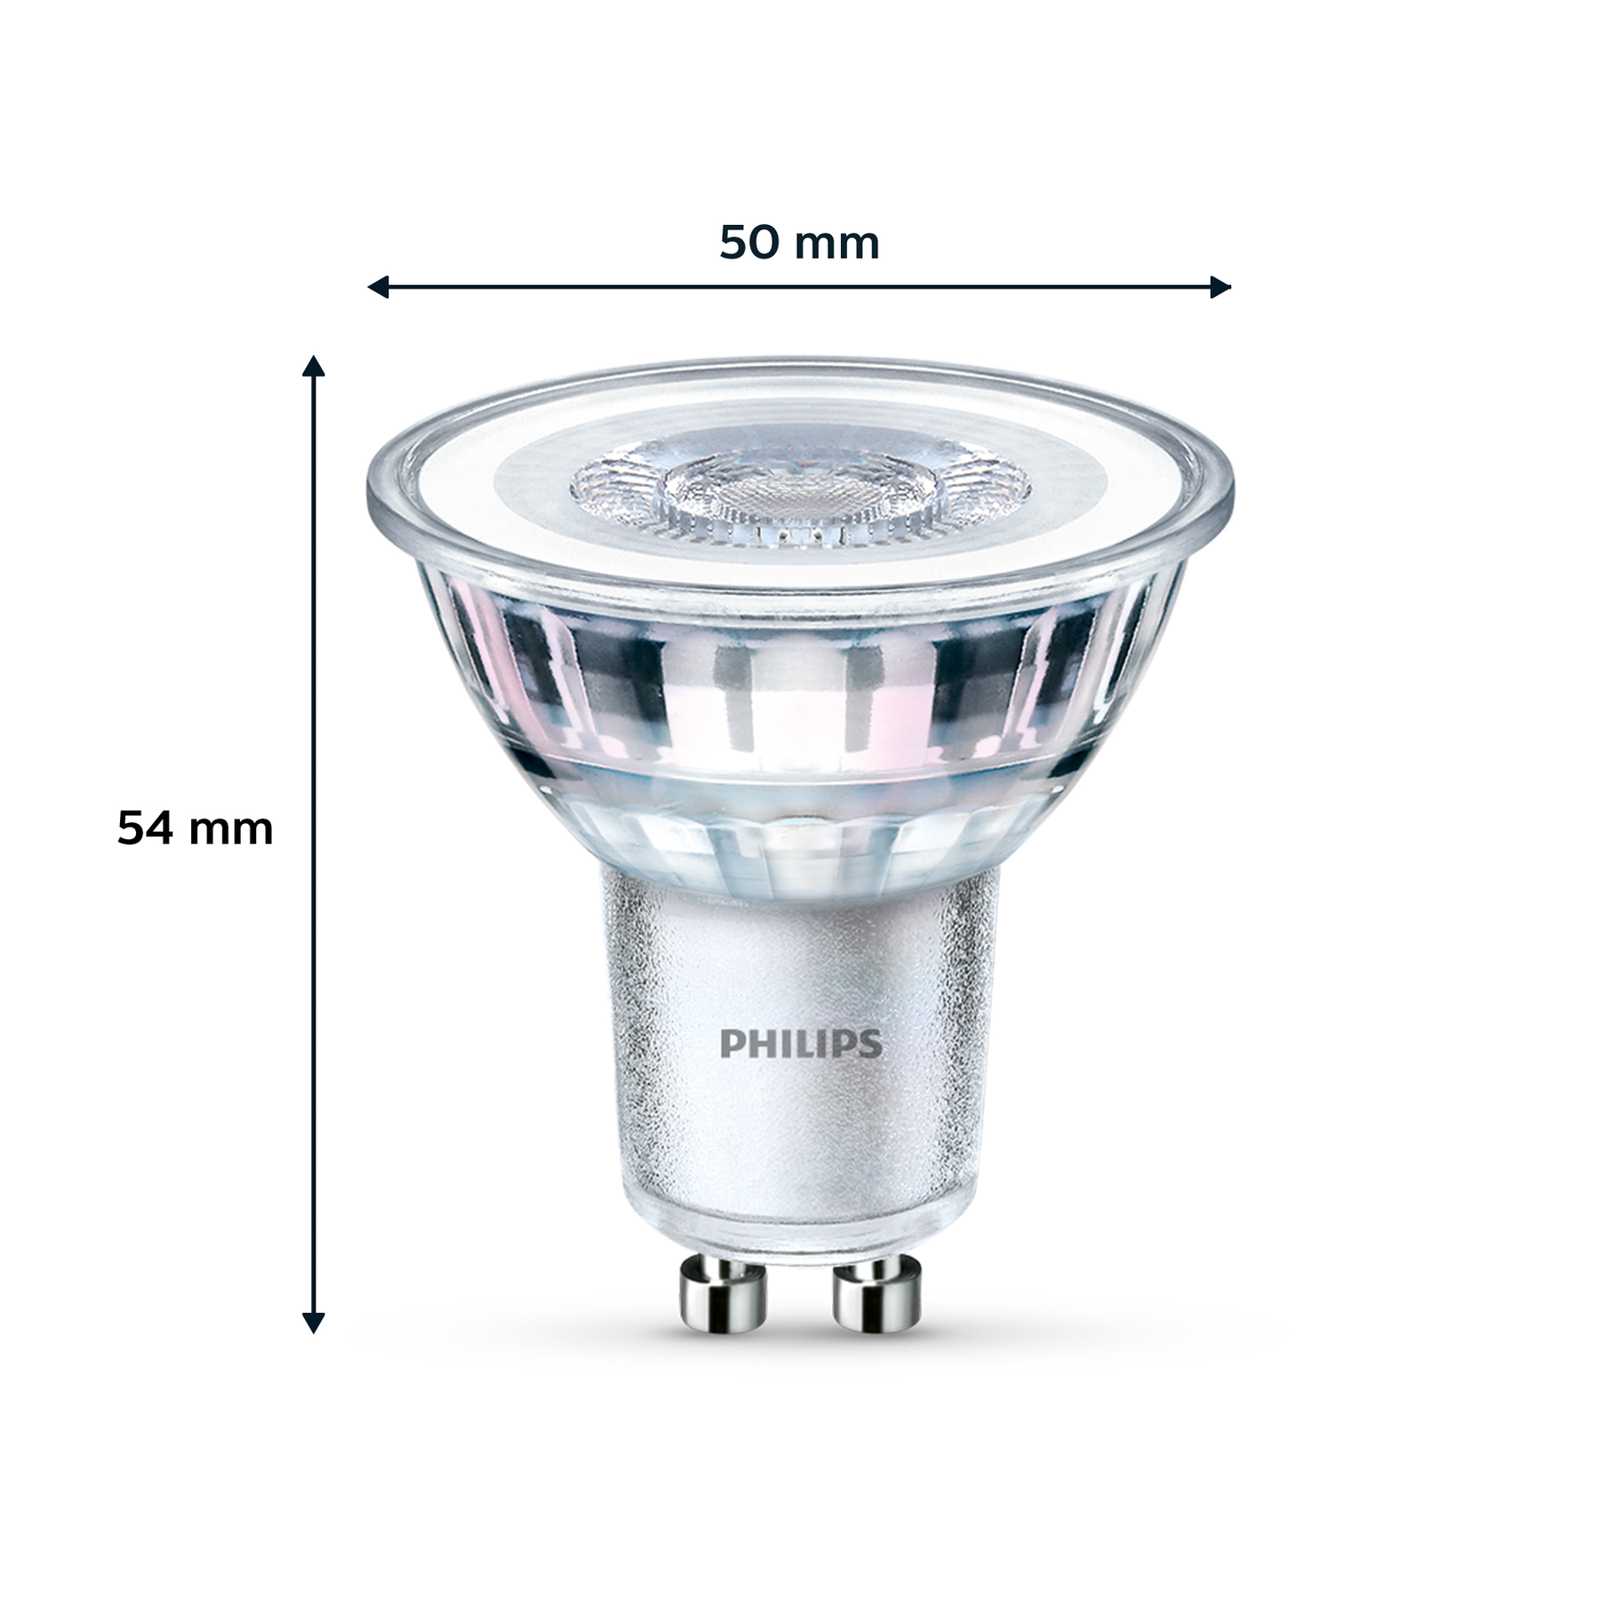 Philips LED žárovka GU10 3,5W 255lm 827 čirá 36° 2